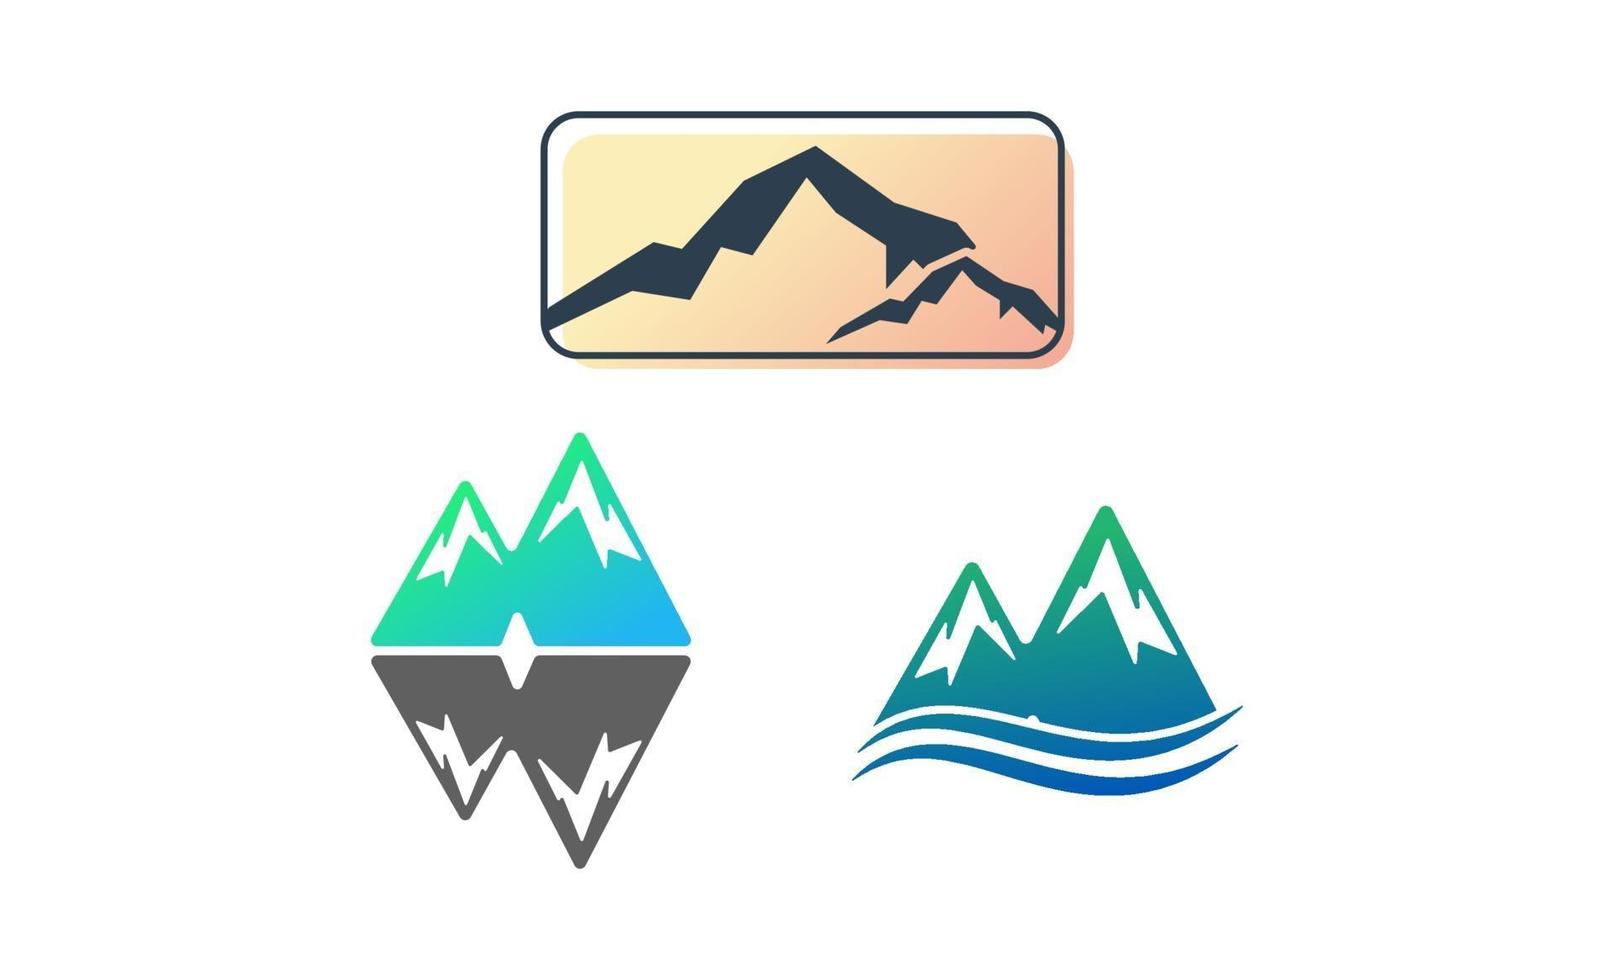 vetor de modelo de design de logotipo de montanha